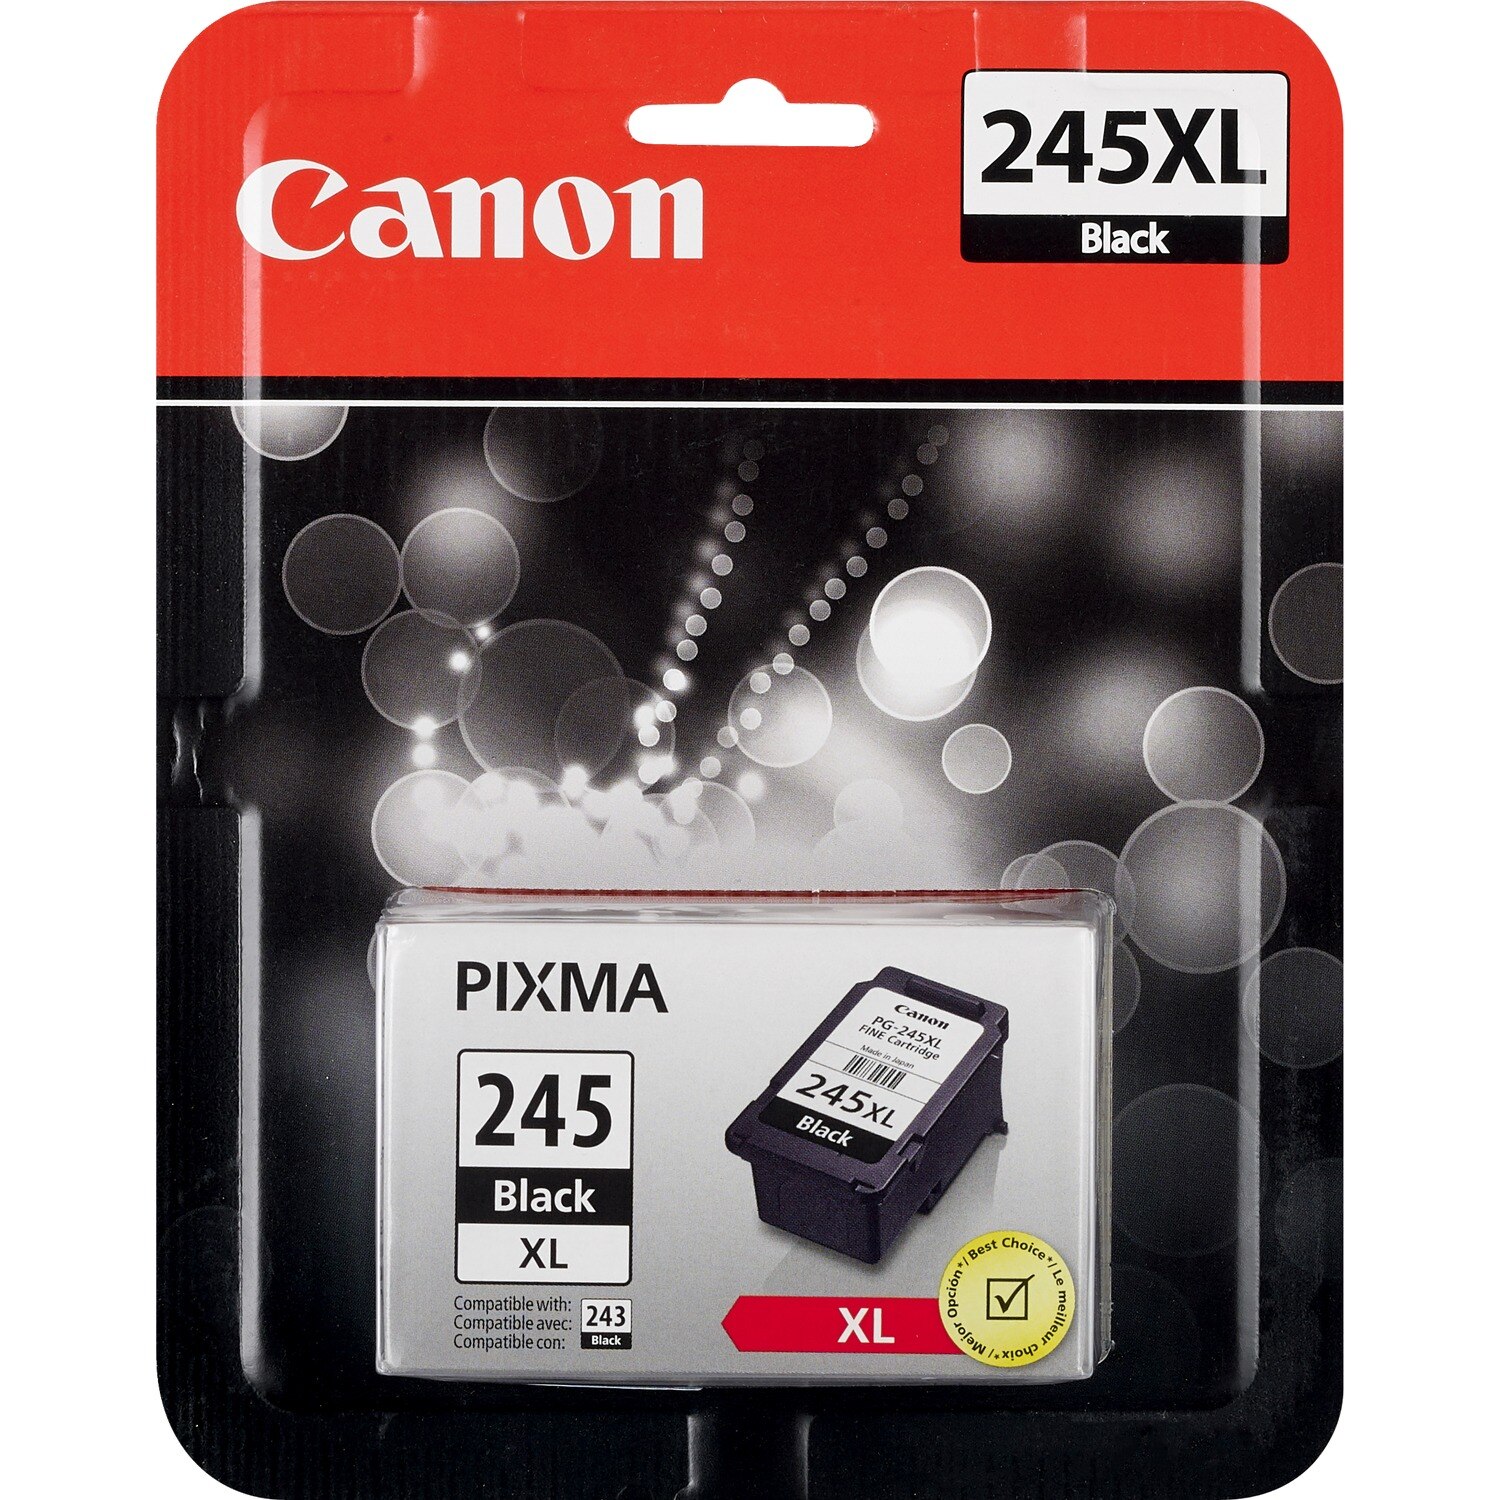 Canon PG-245XL Fine Ink Cartridge, Black